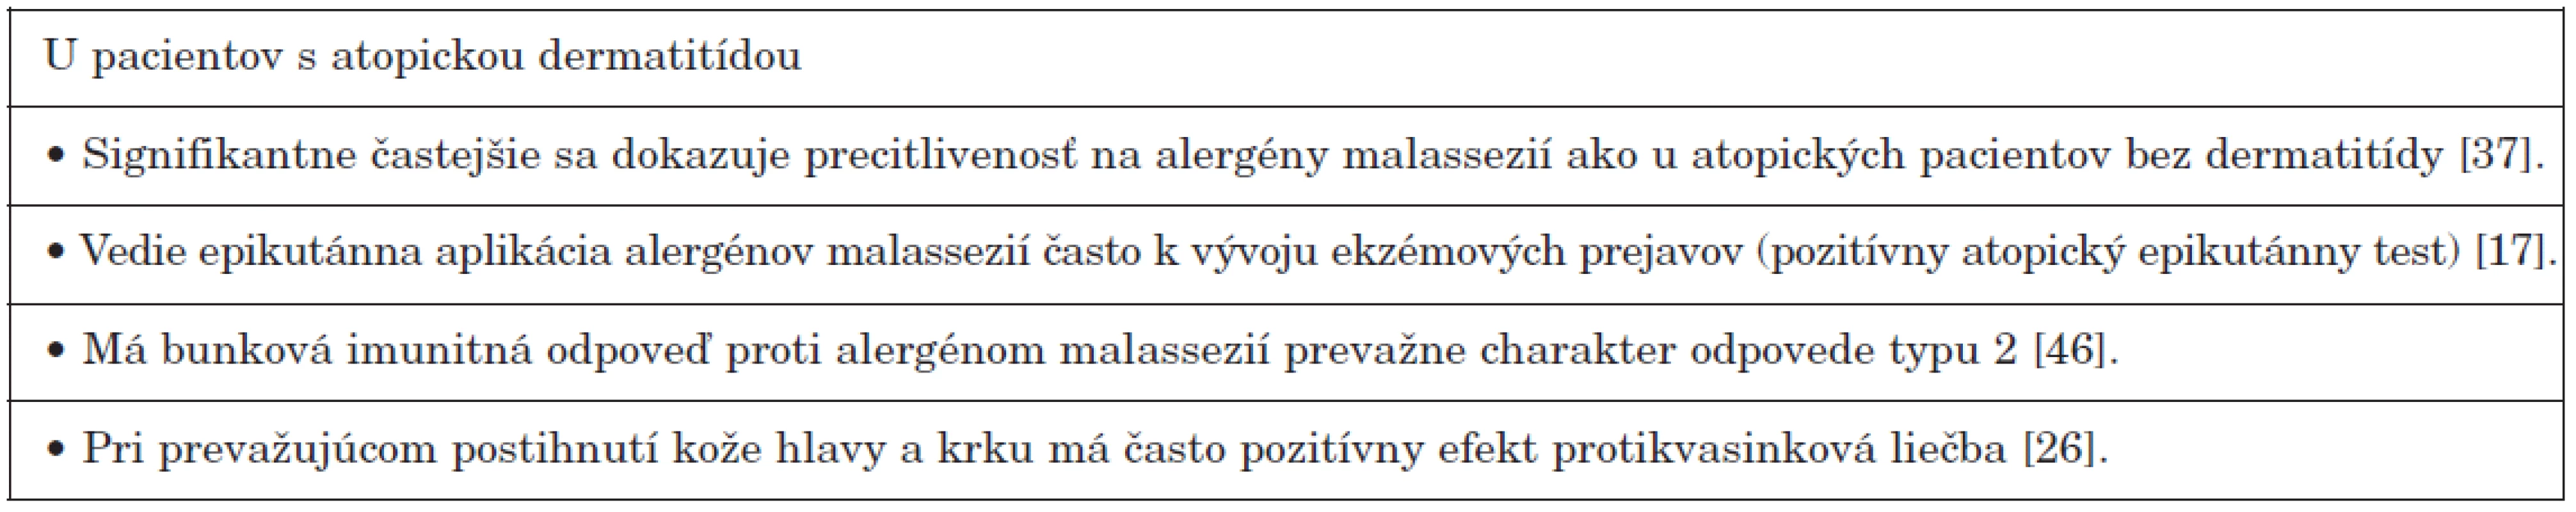 Dôkazy účasti kvasiniek rodu Malassezia na patogenéze atopickej dermatitídy
Table 2. Evidence of participation of Malassezia yeasts in the pathogenesis of atopic dermatitis